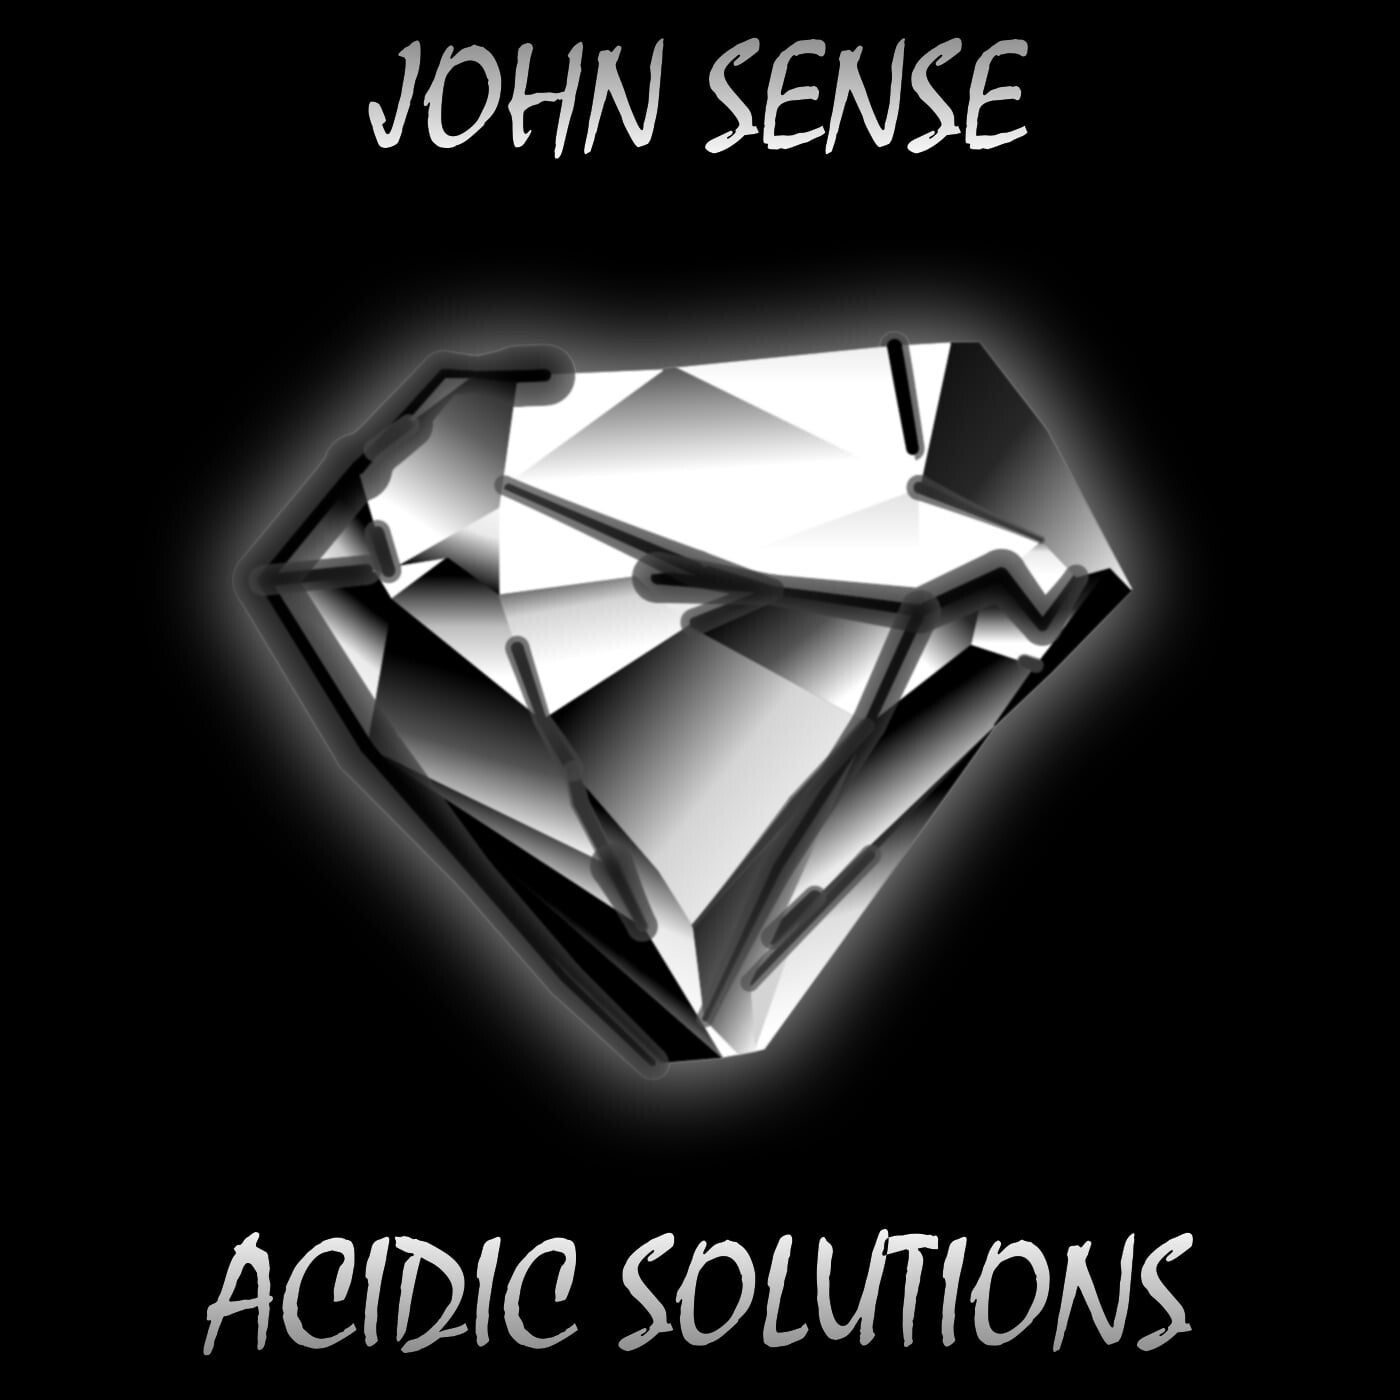 Acidic Solutions EP